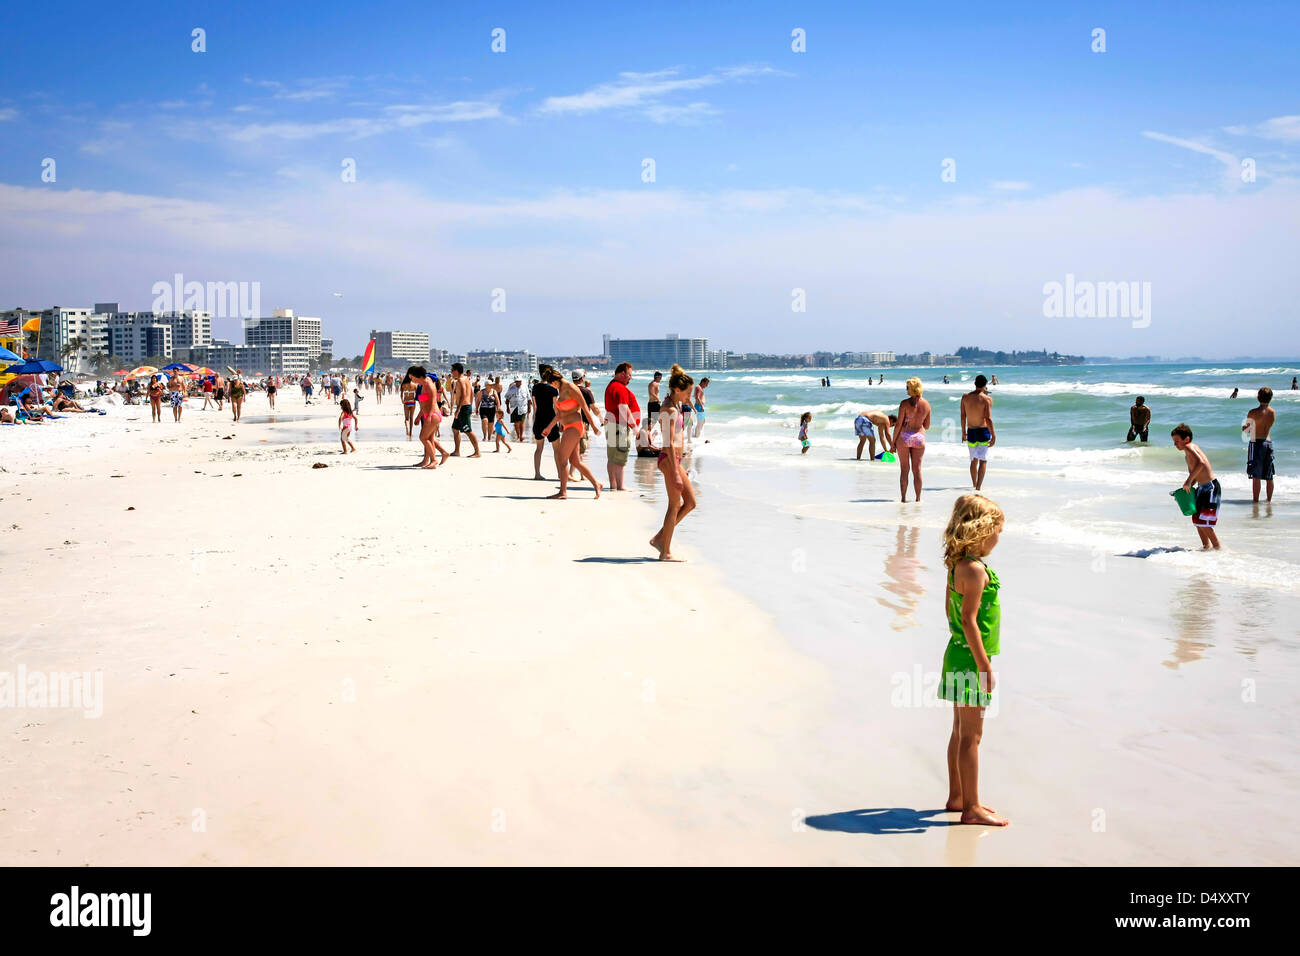 People enjoying the sunshine on Siesta Key beach Florida during Spring